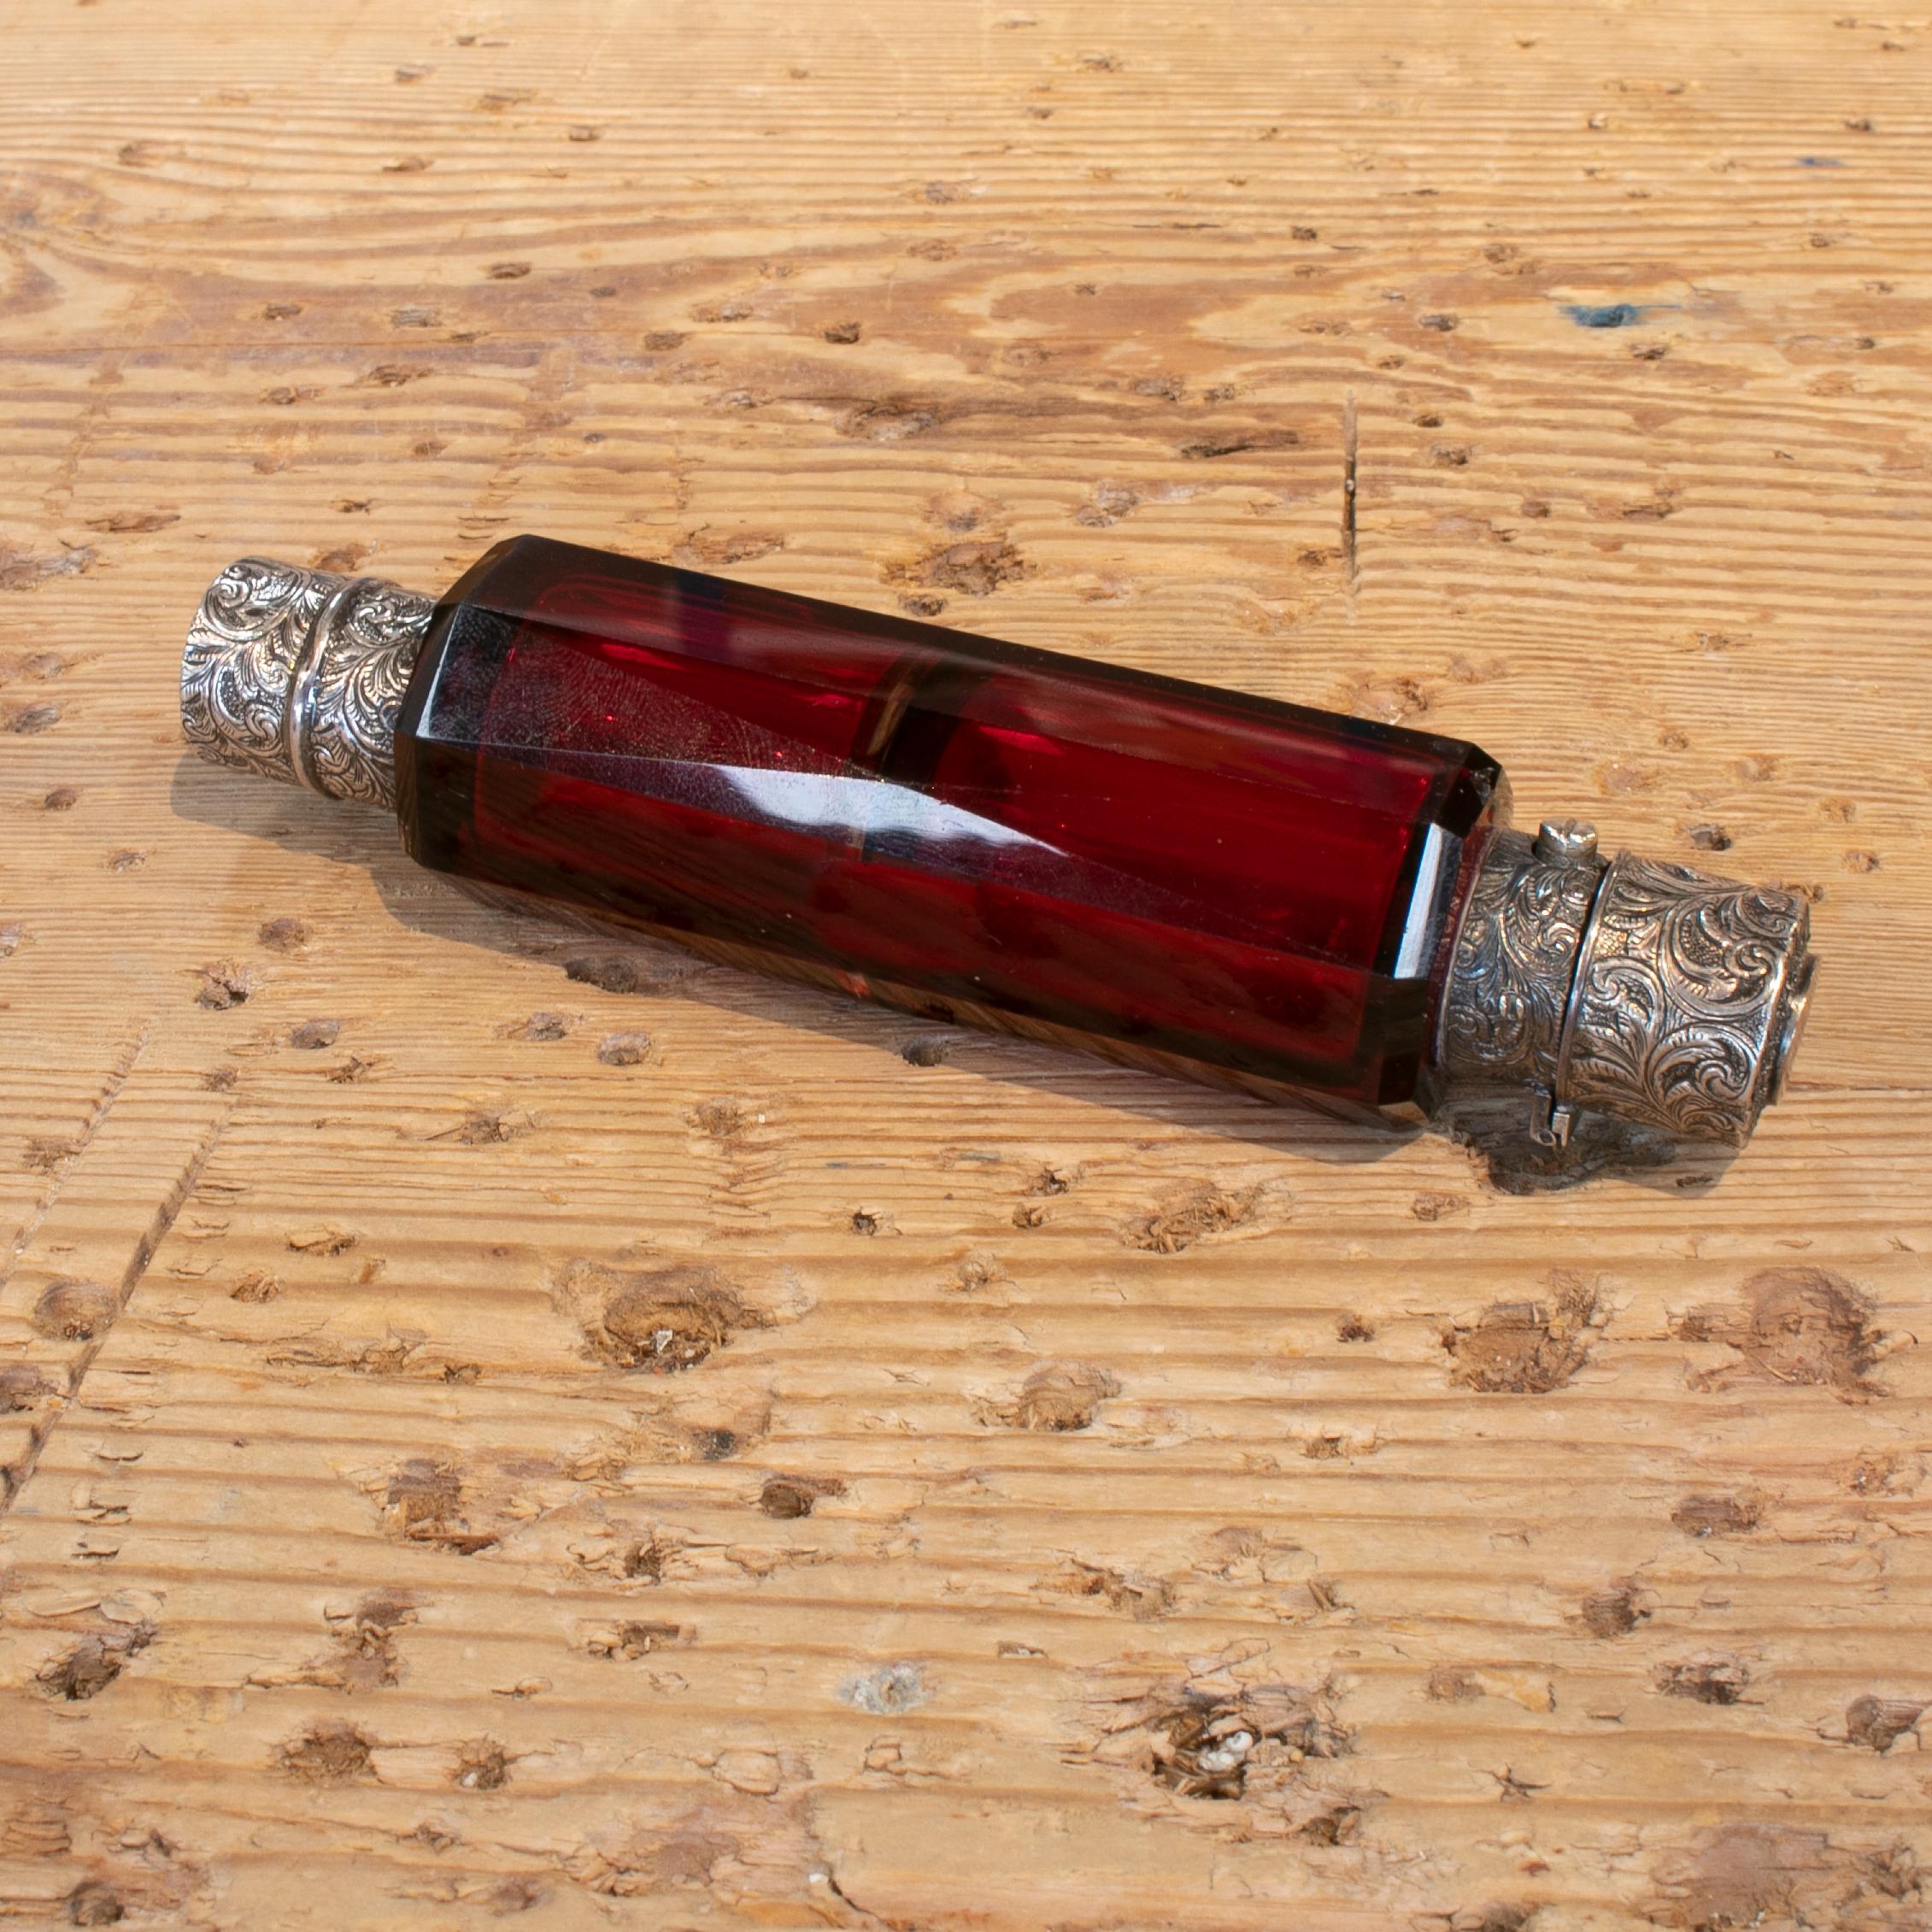 crown shaped perfume bottle